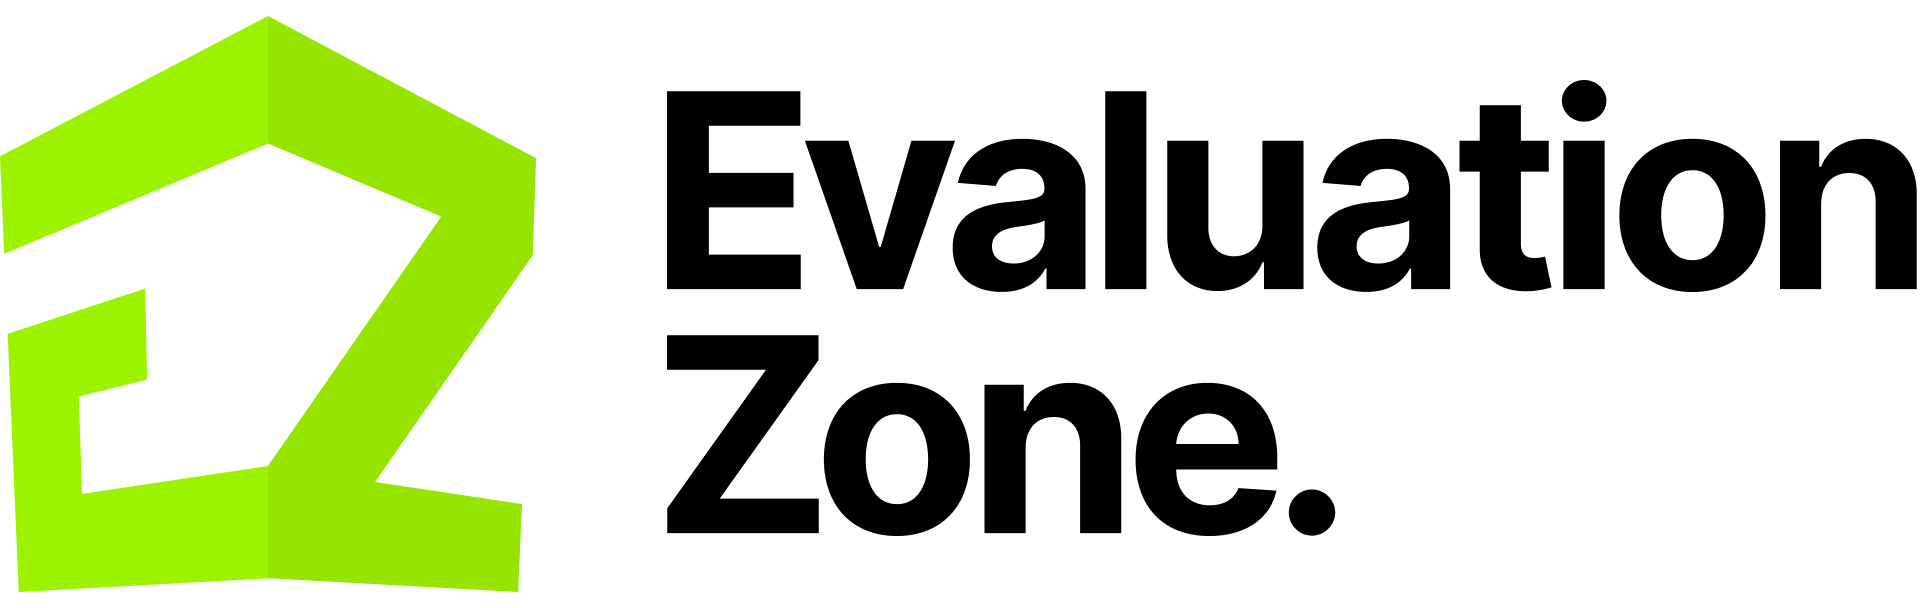 eValuation ZONE, Inc.'s logo